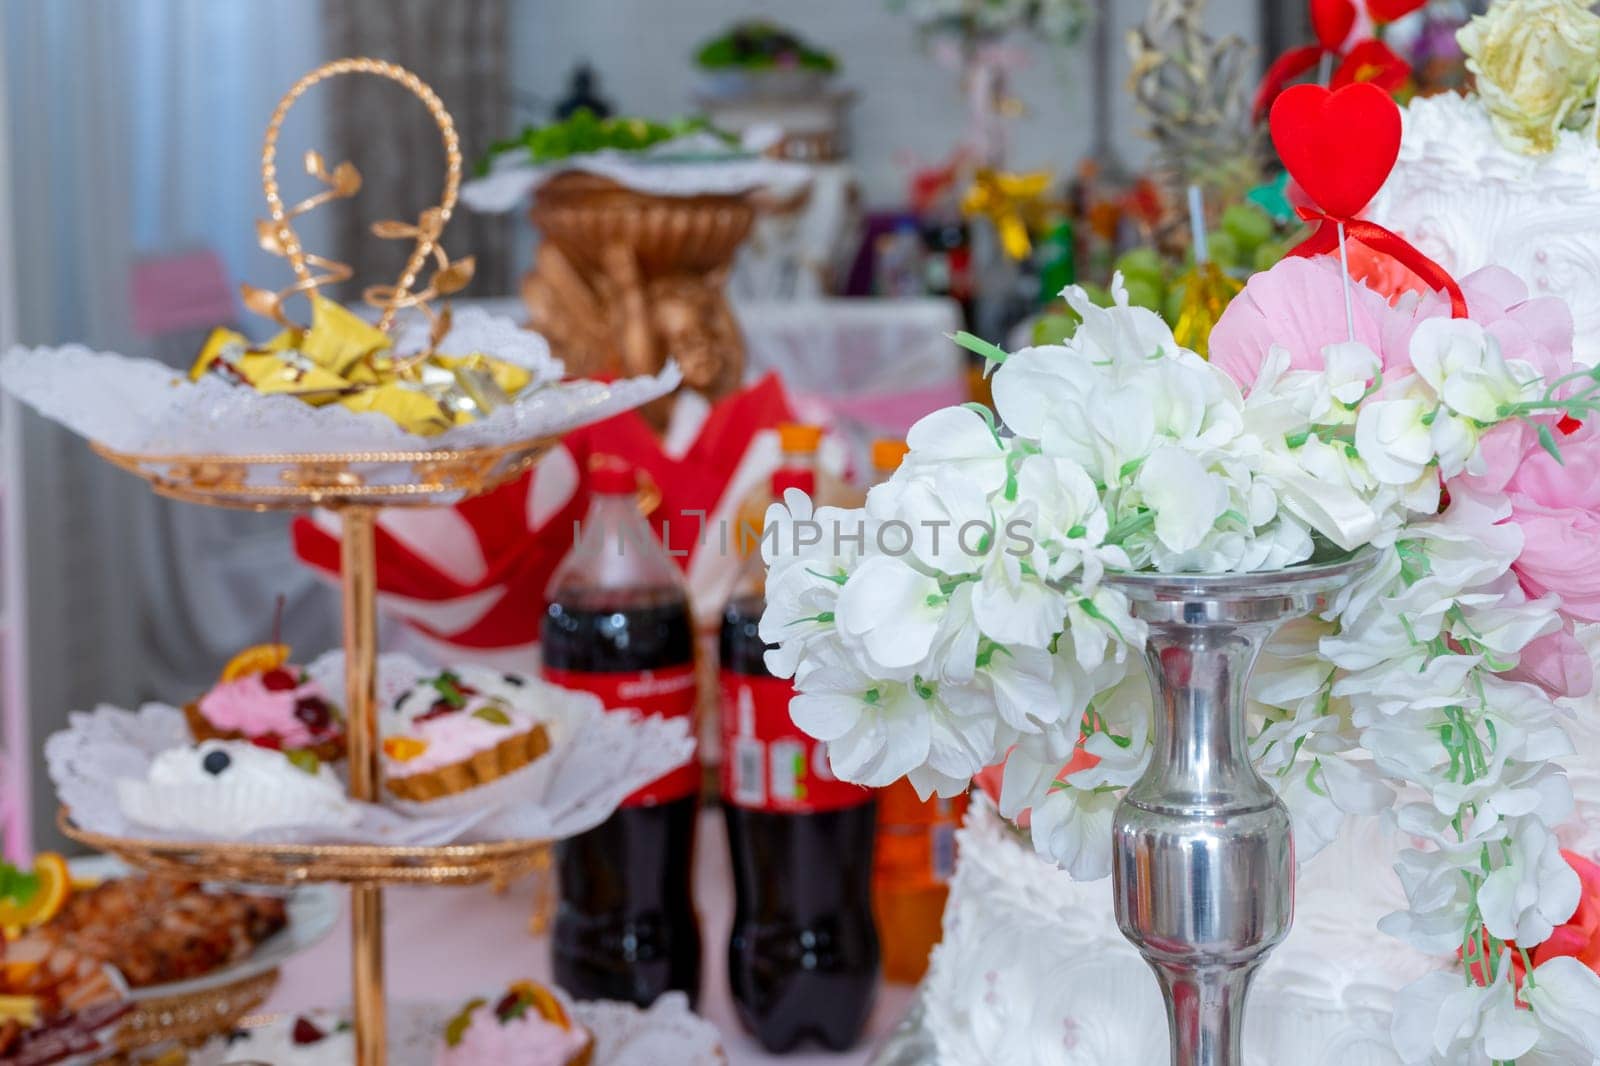 Decorating the wedding table at a gypsy wedding. Ukraine, Vinnytsia, August 10, 2021